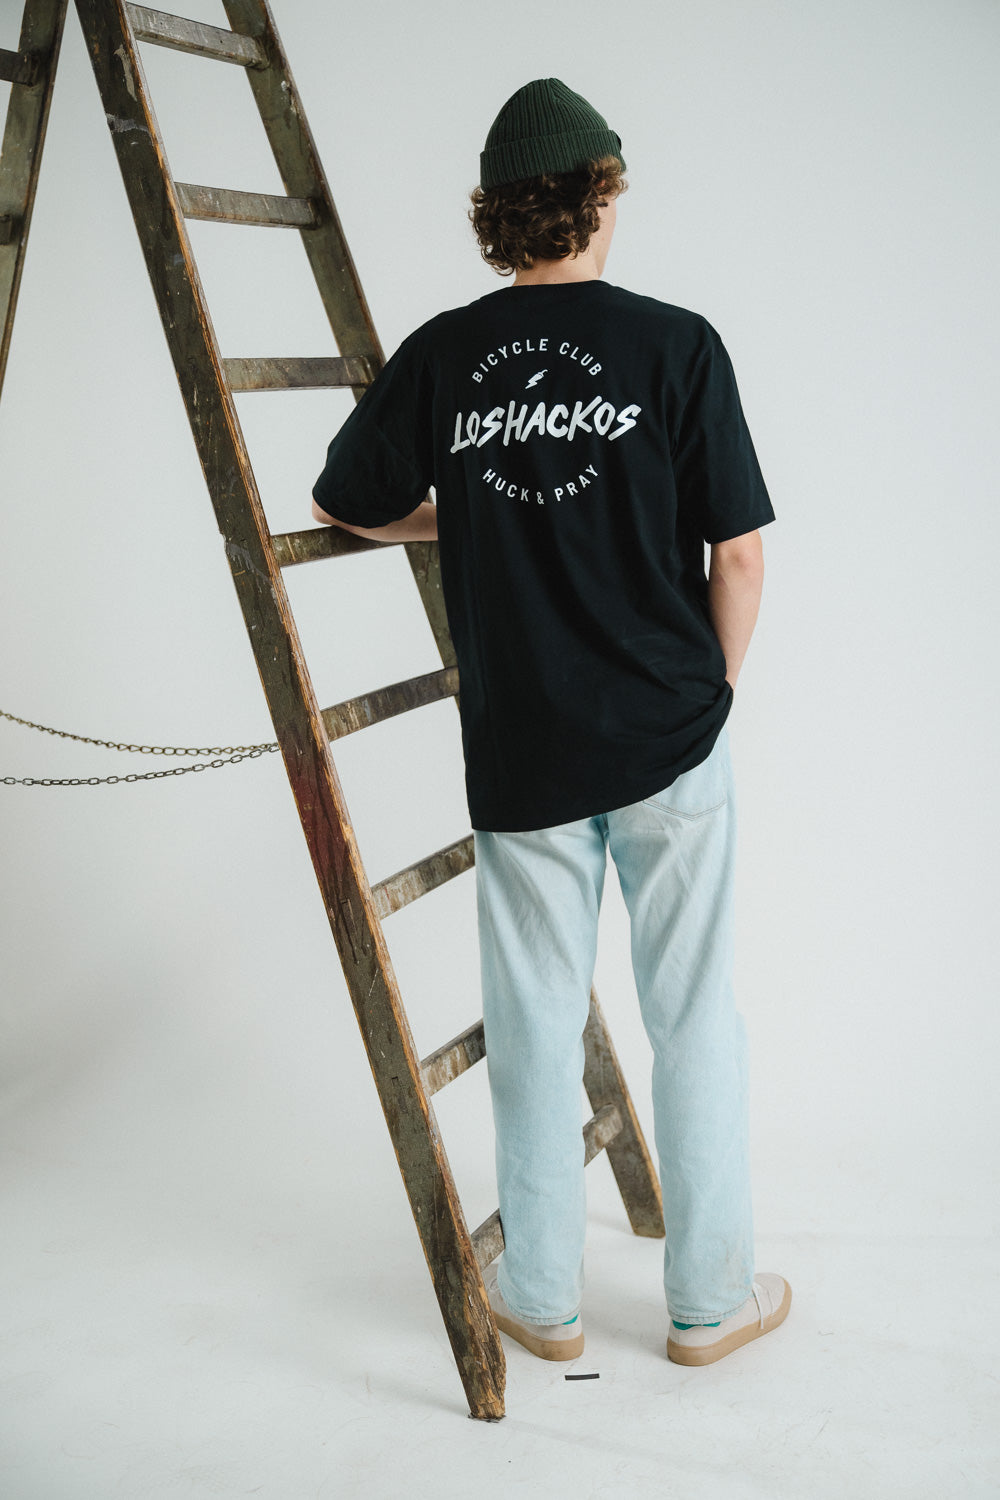 Loshackos Loose T-Shirt | Huck & Pray